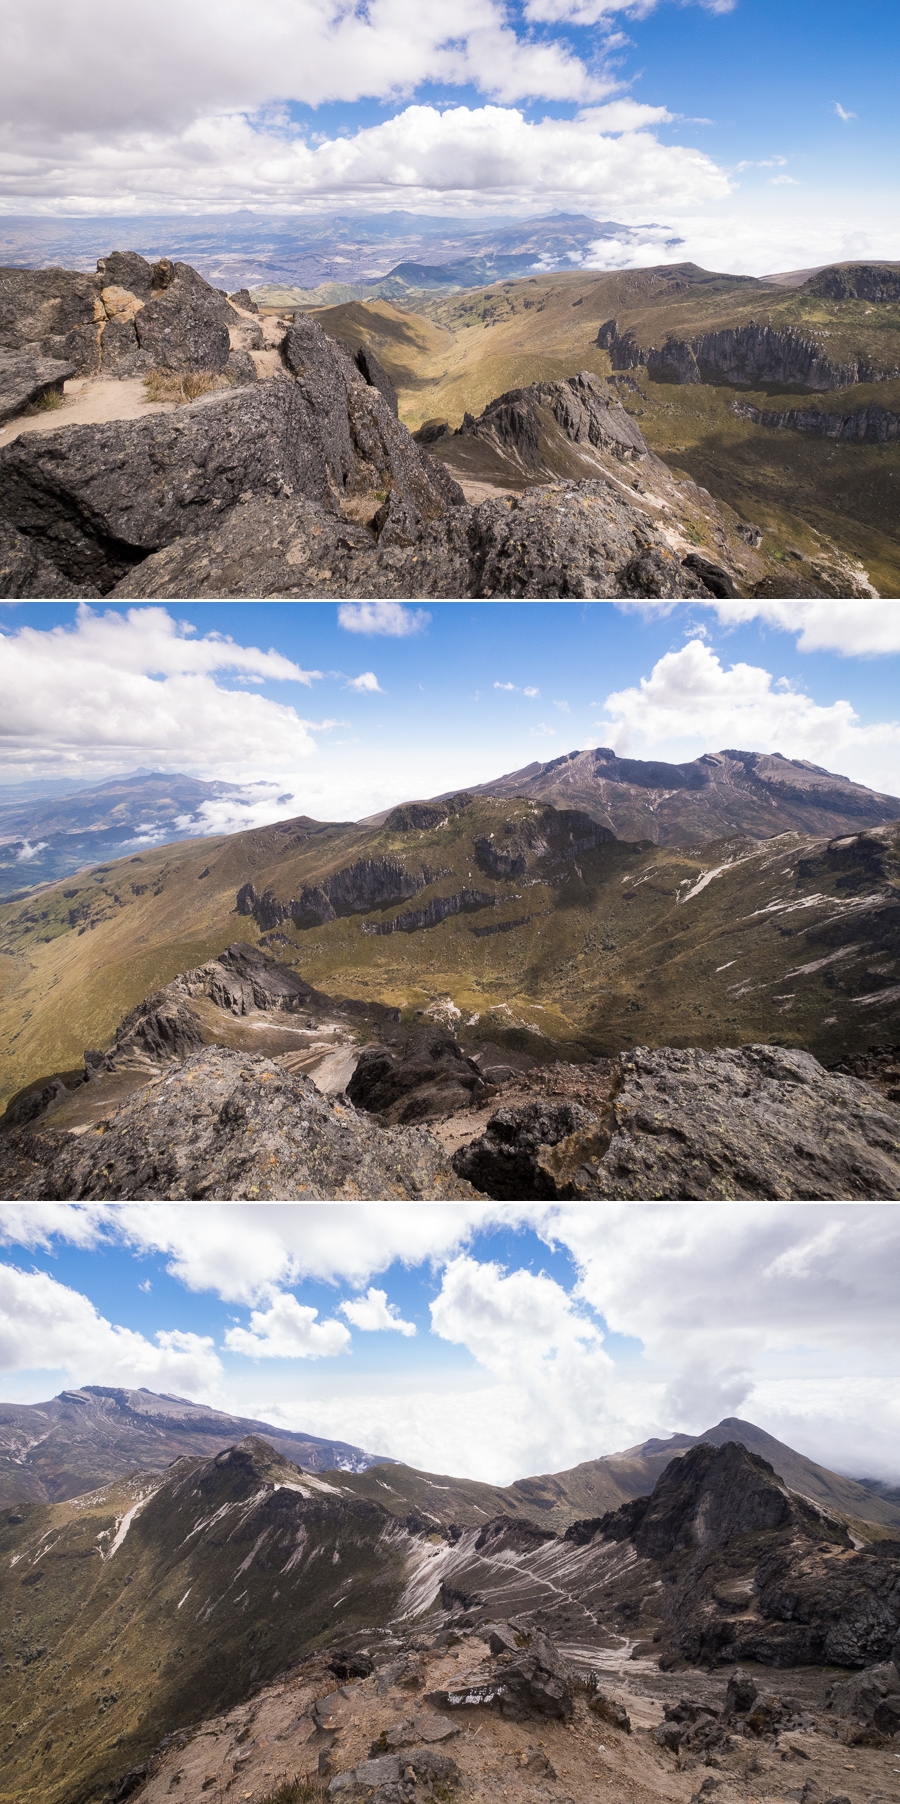 Volcán Pichincha summit views